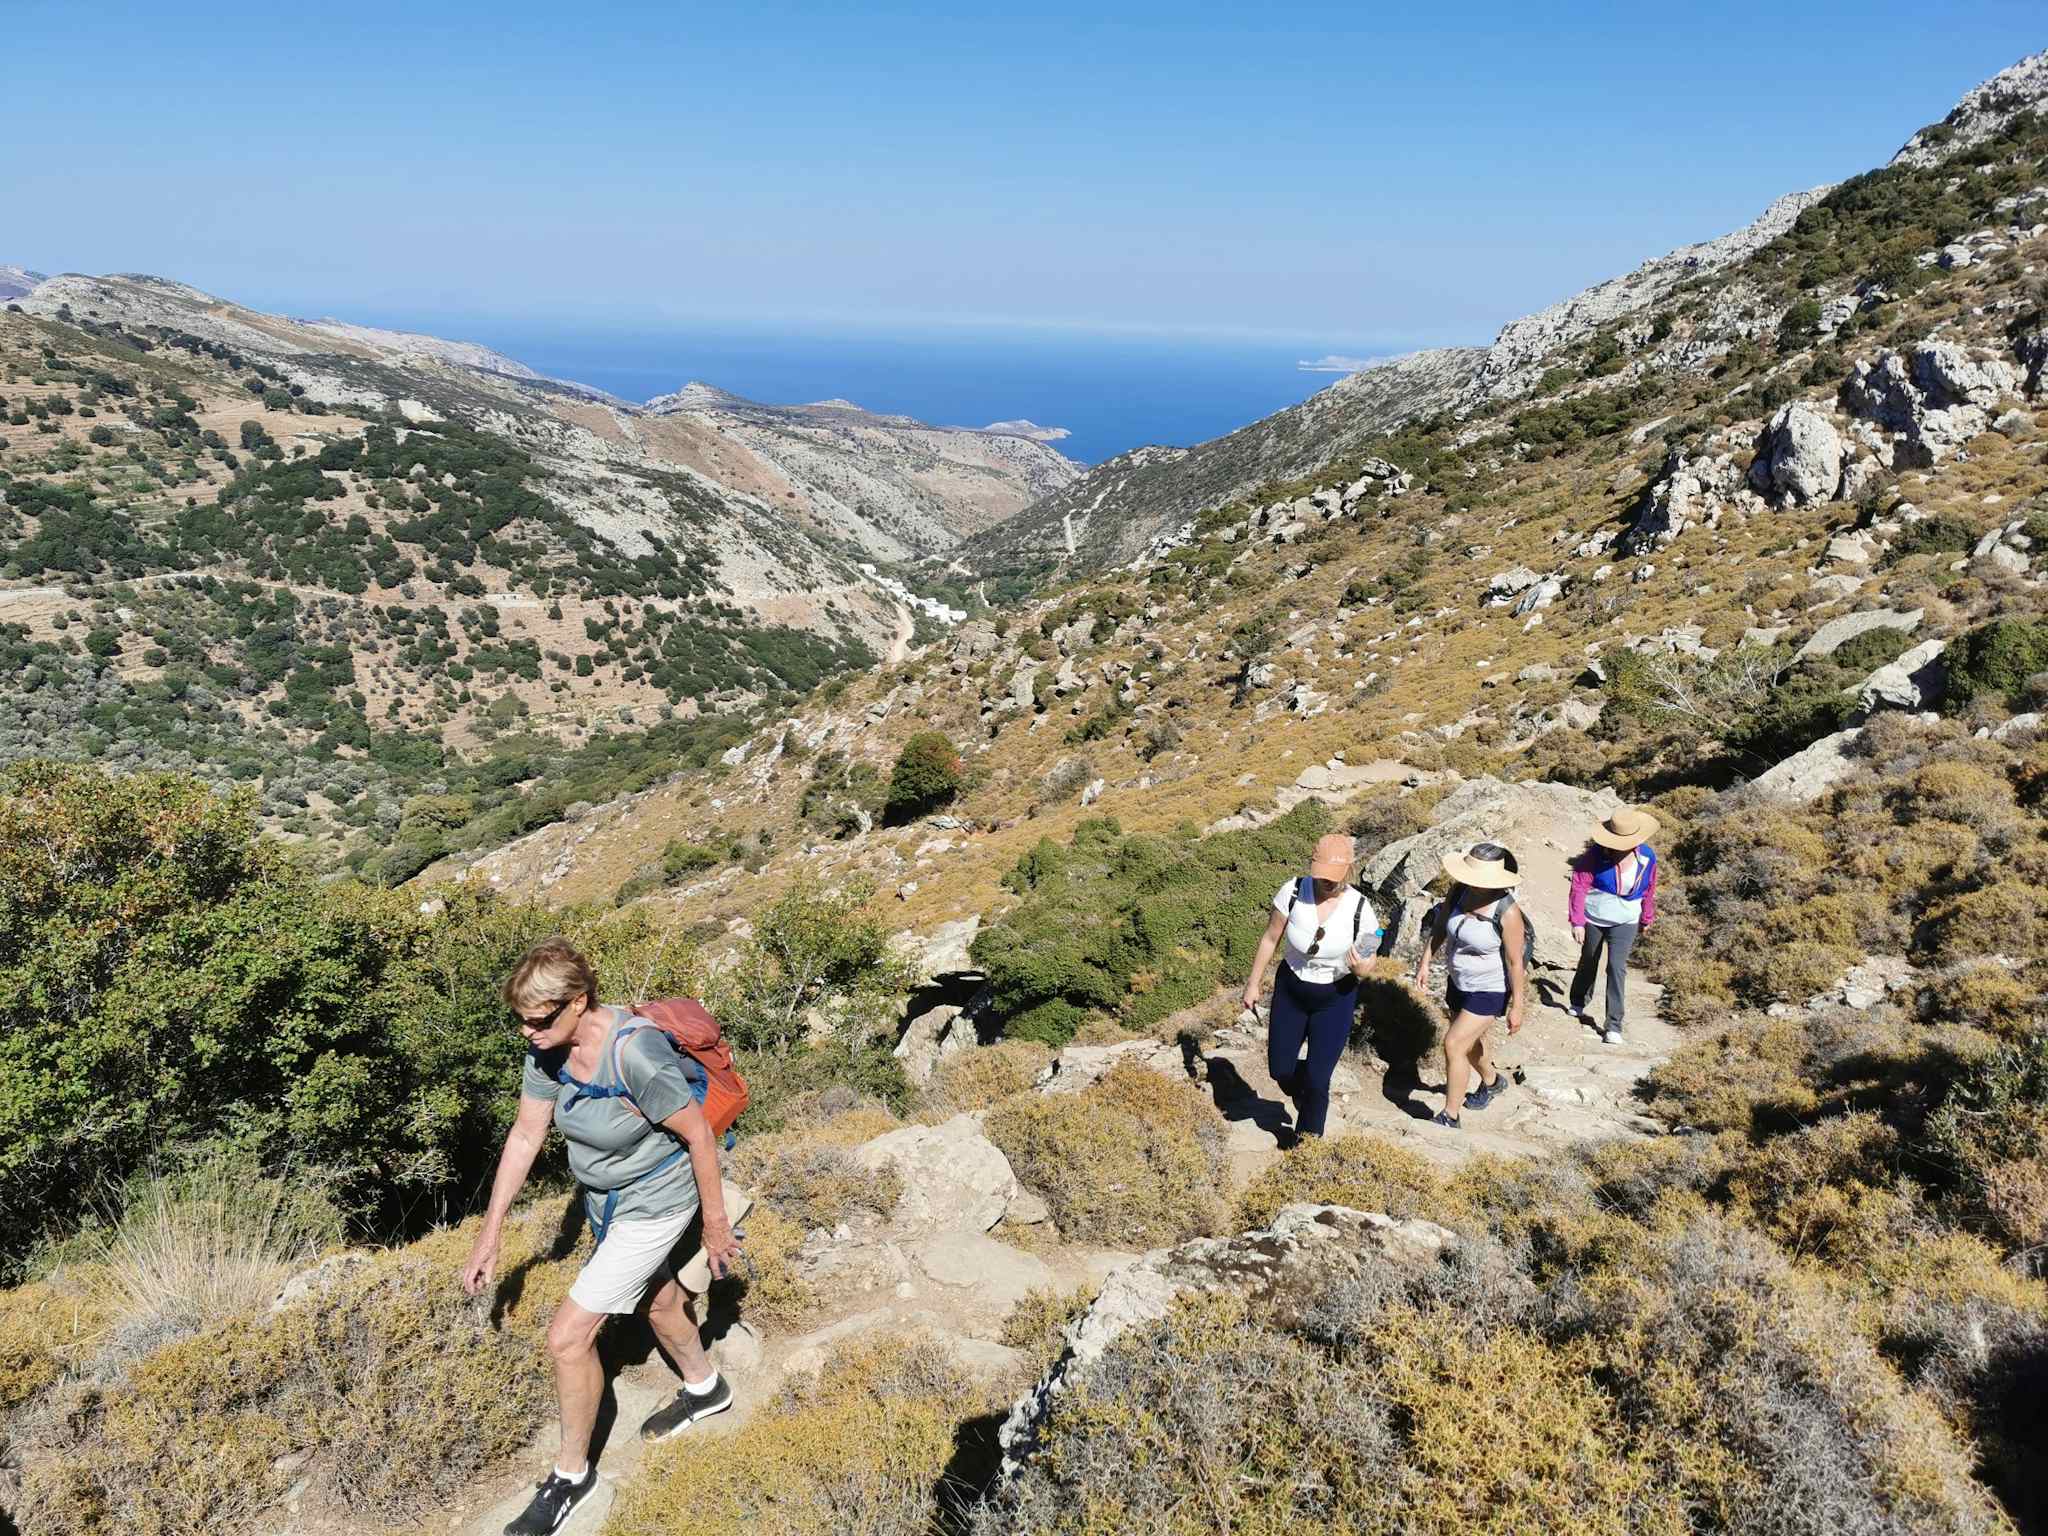 Tinos Hiking Greece
Host image - Nomads Path